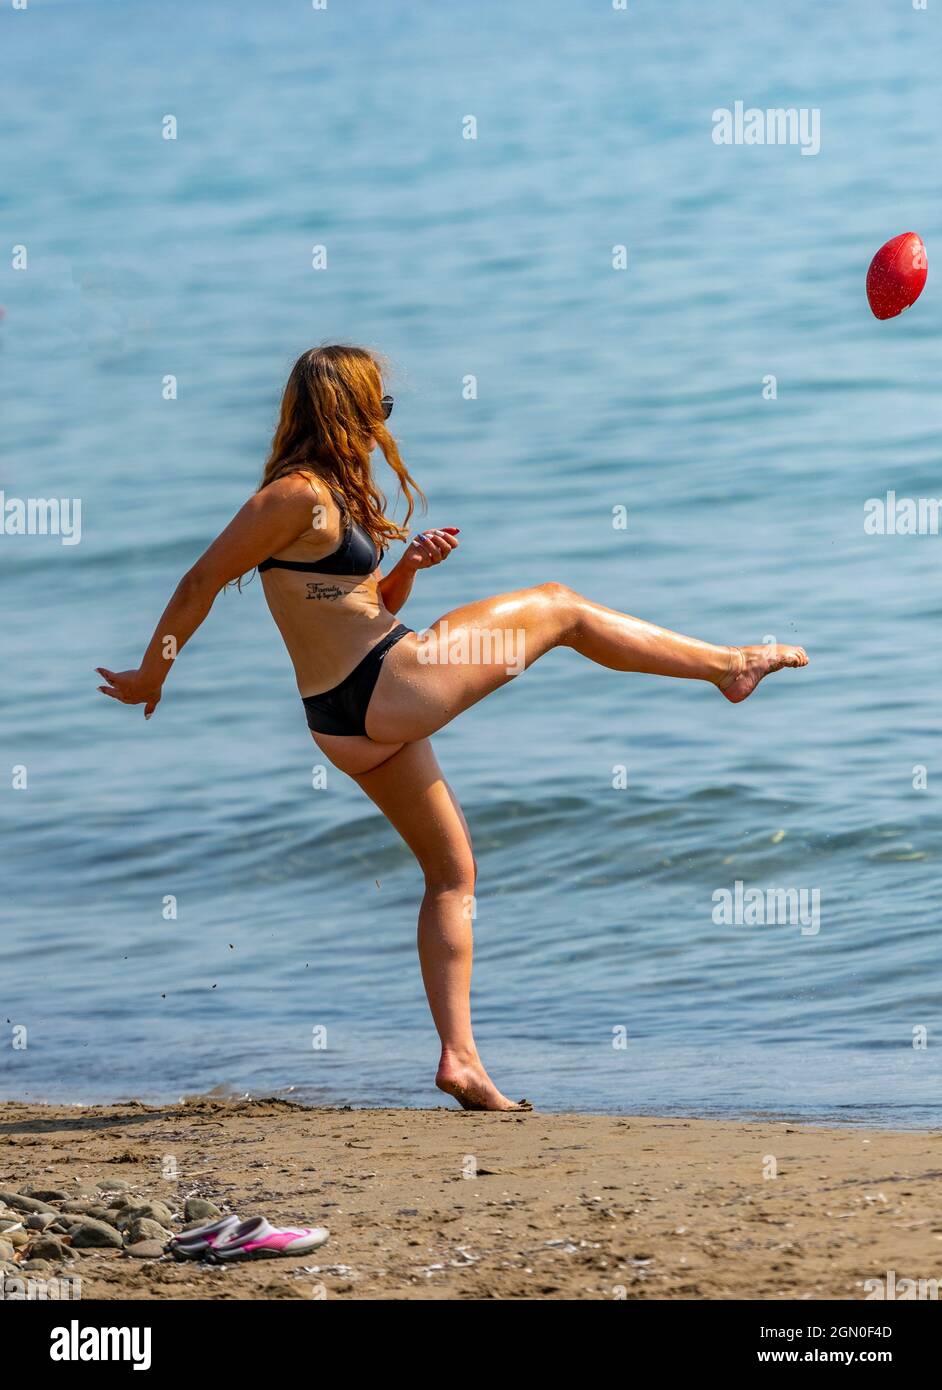 Woman bikini kick hi-res stock photography and images - Alamy